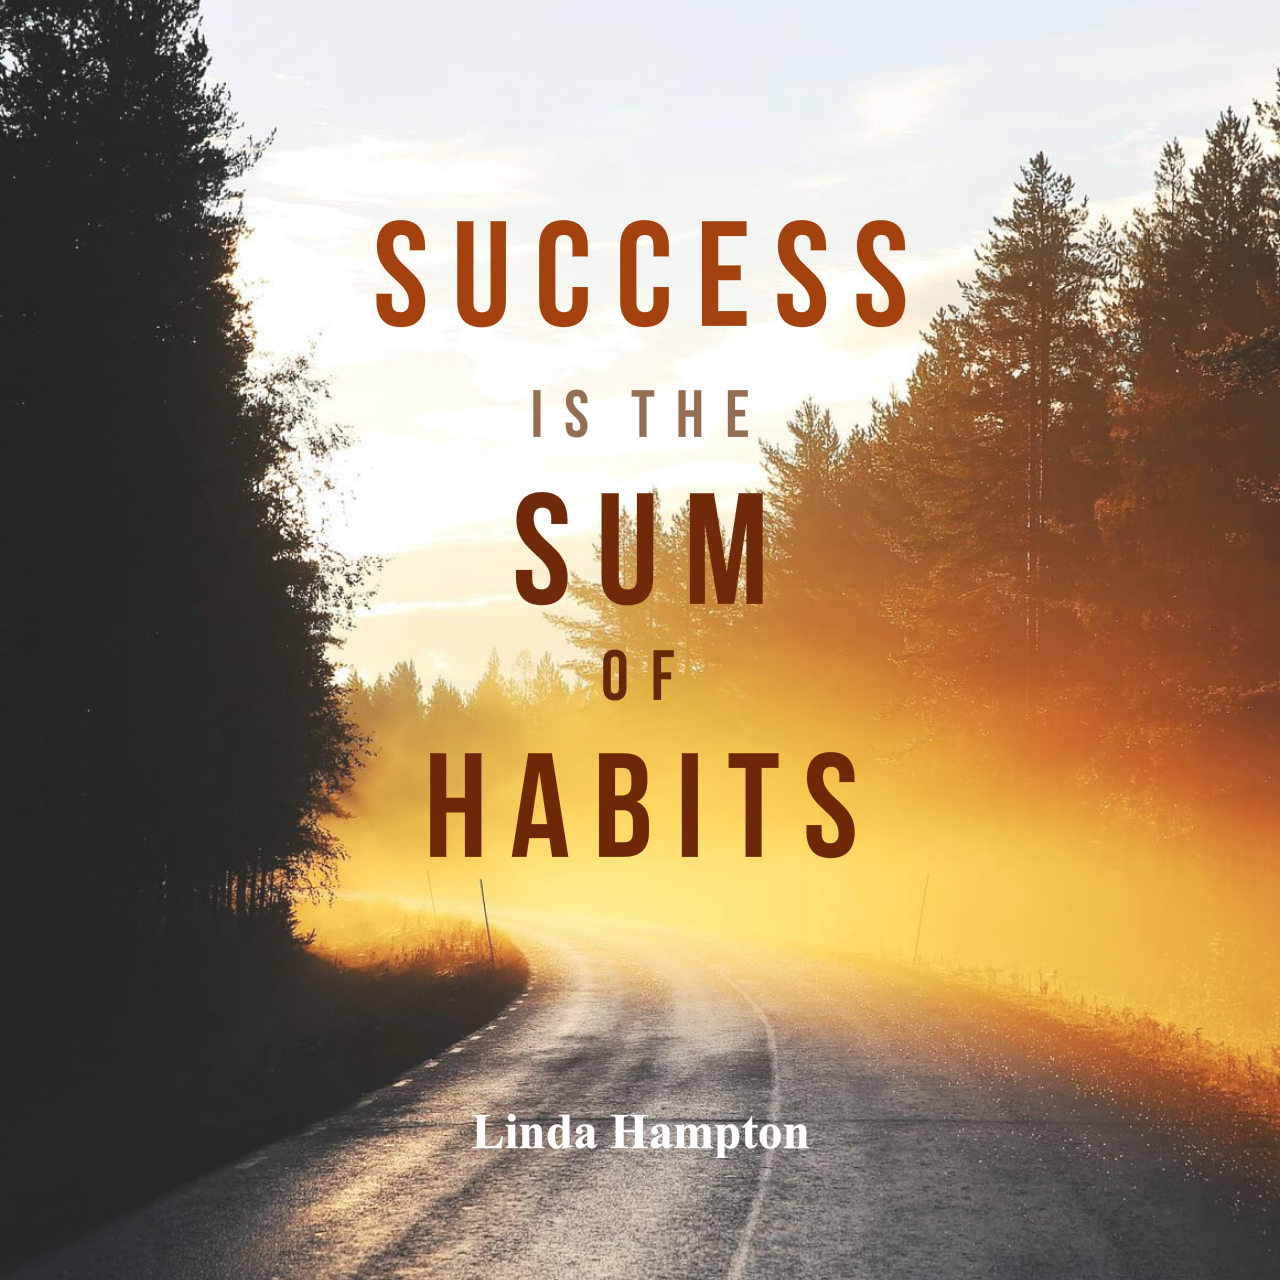 Do Your Habits Create Success?